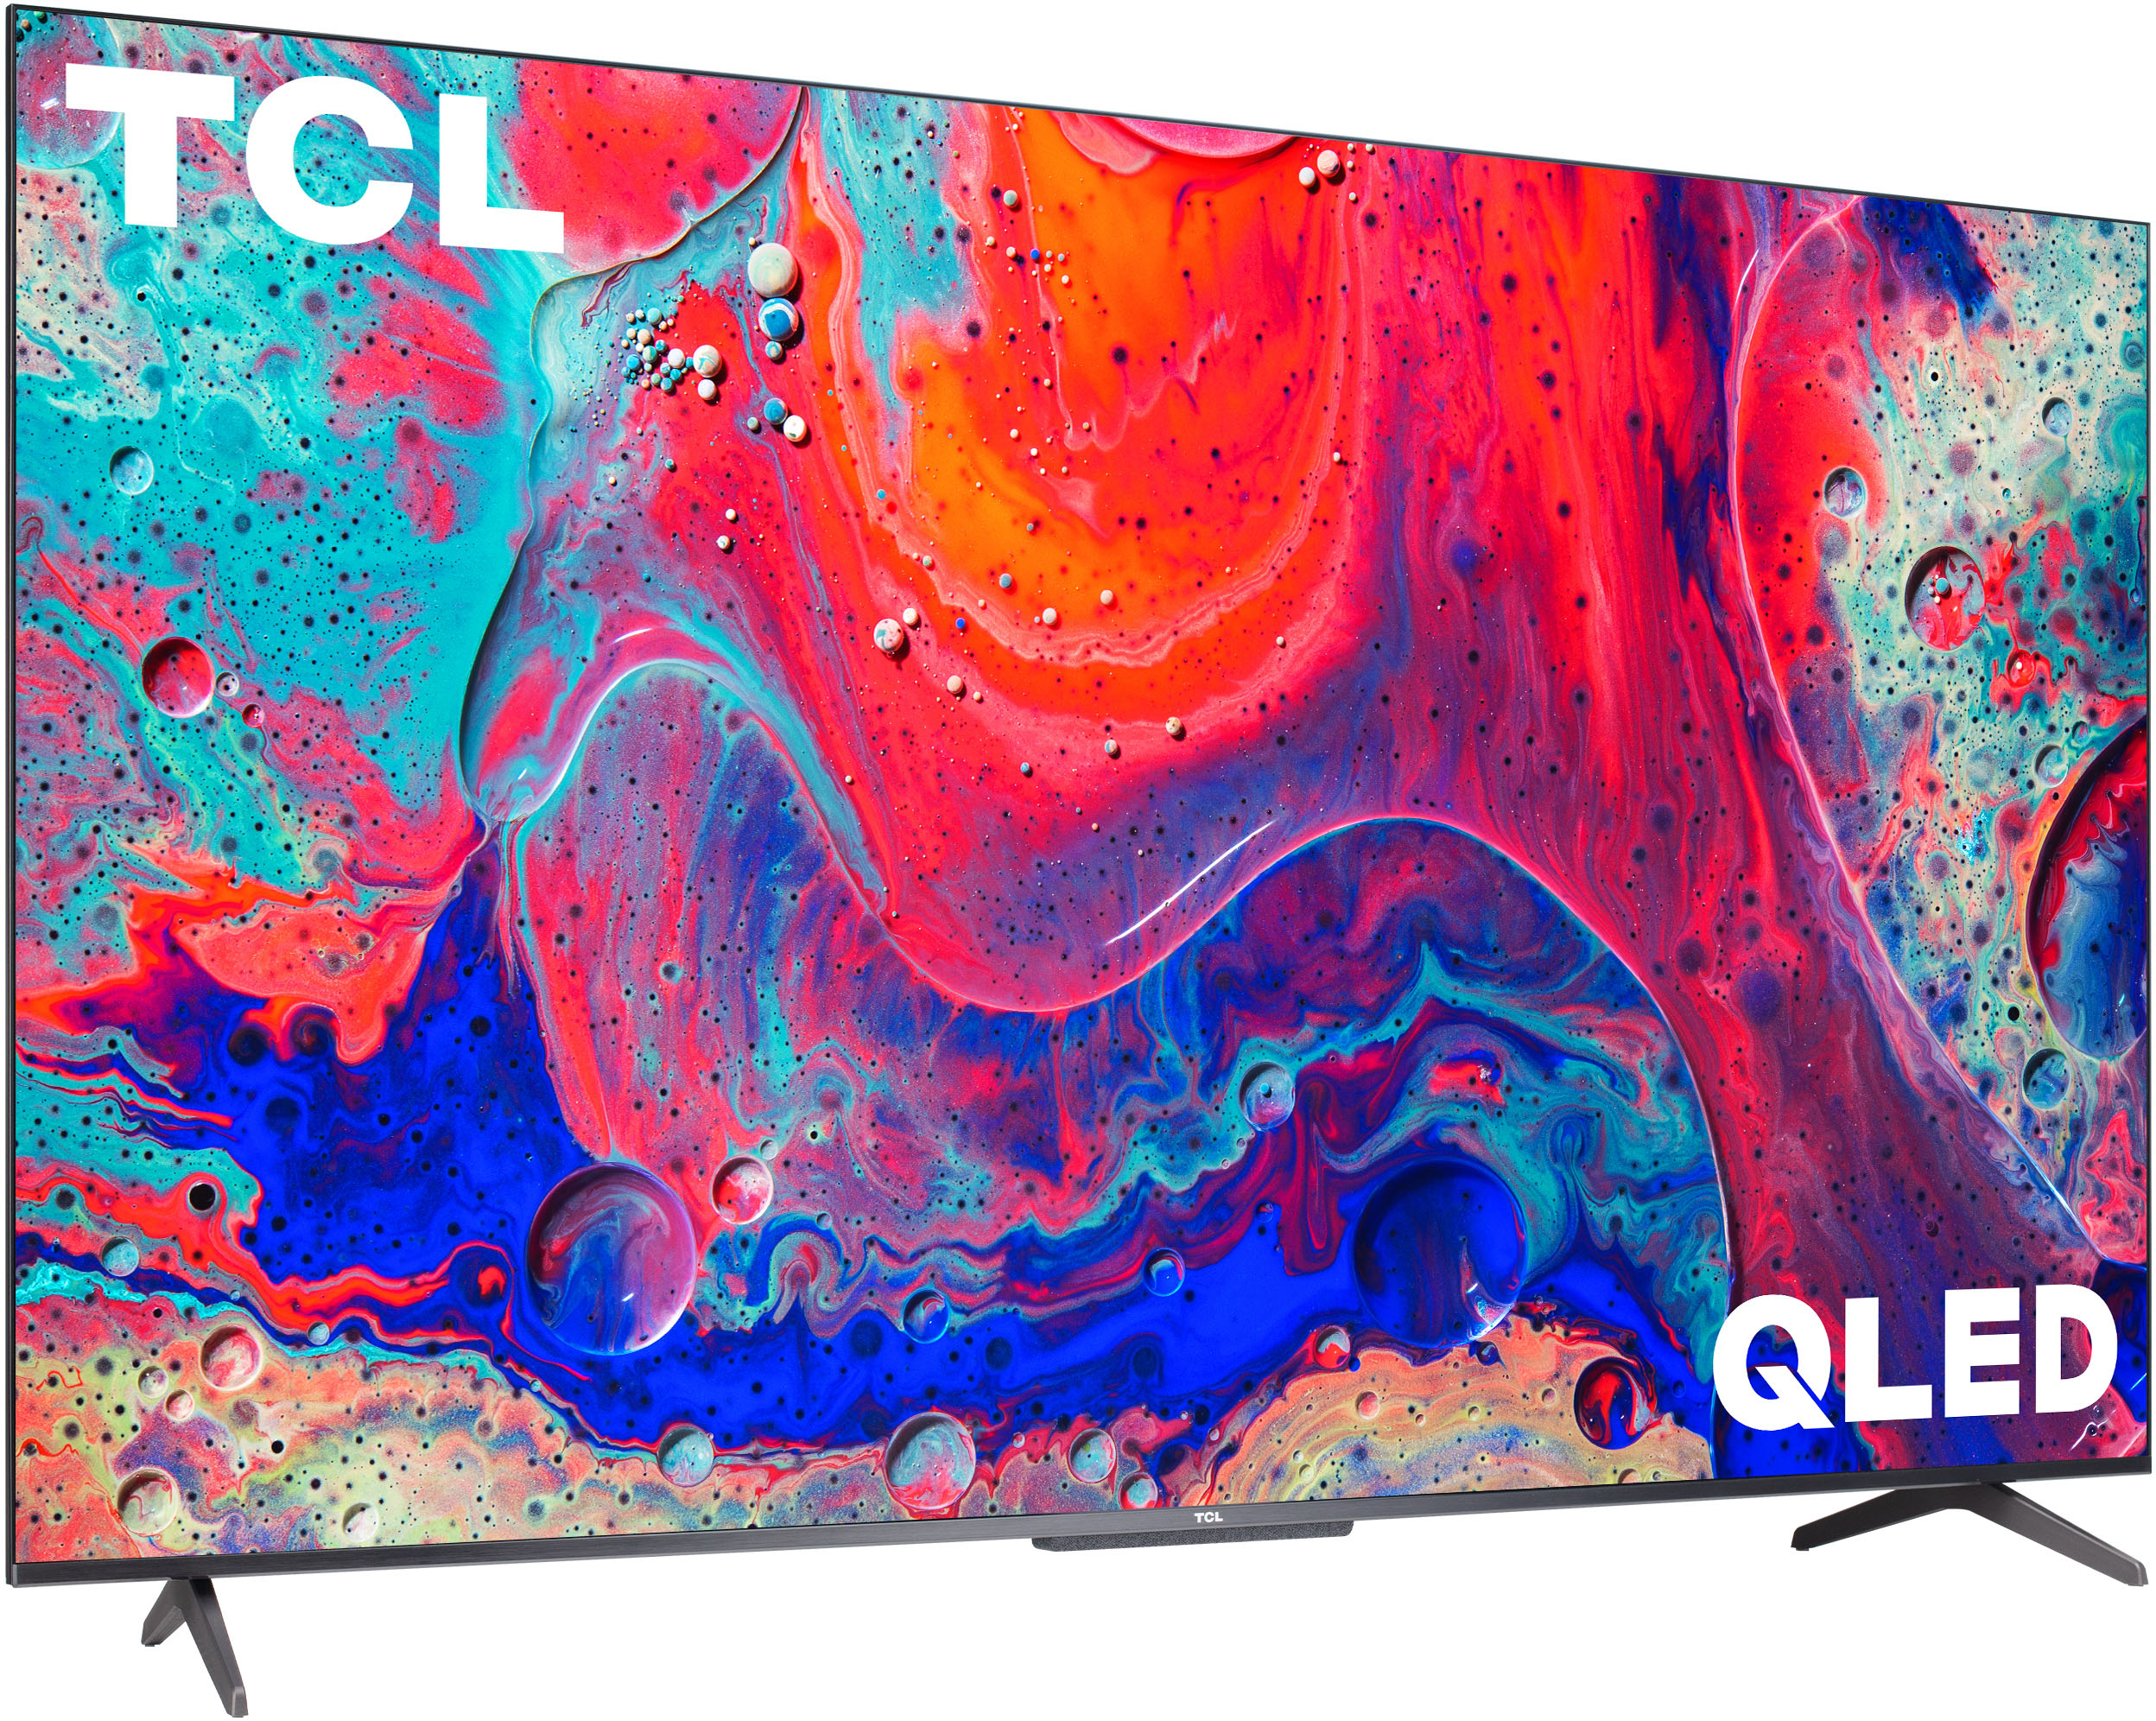 75" TCL 5-Series (S546) QLED 4K UHD HDR Google TV @ Best Buy $899.99